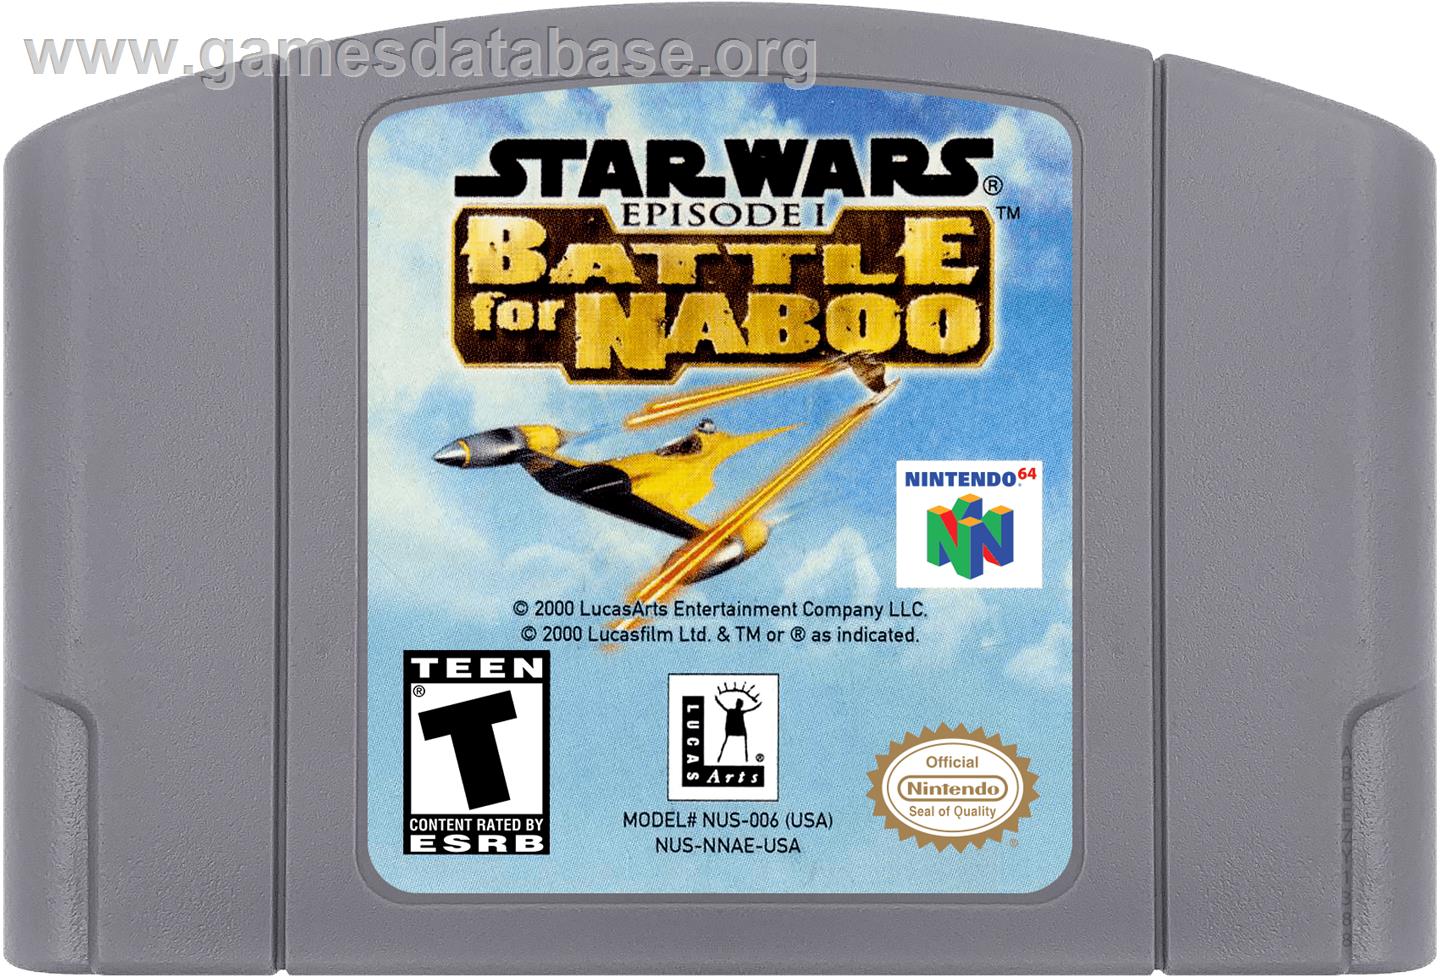 Star Wars: Episode I - Battle for Naboo - Nintendo N64 - Artwork - Cartridge